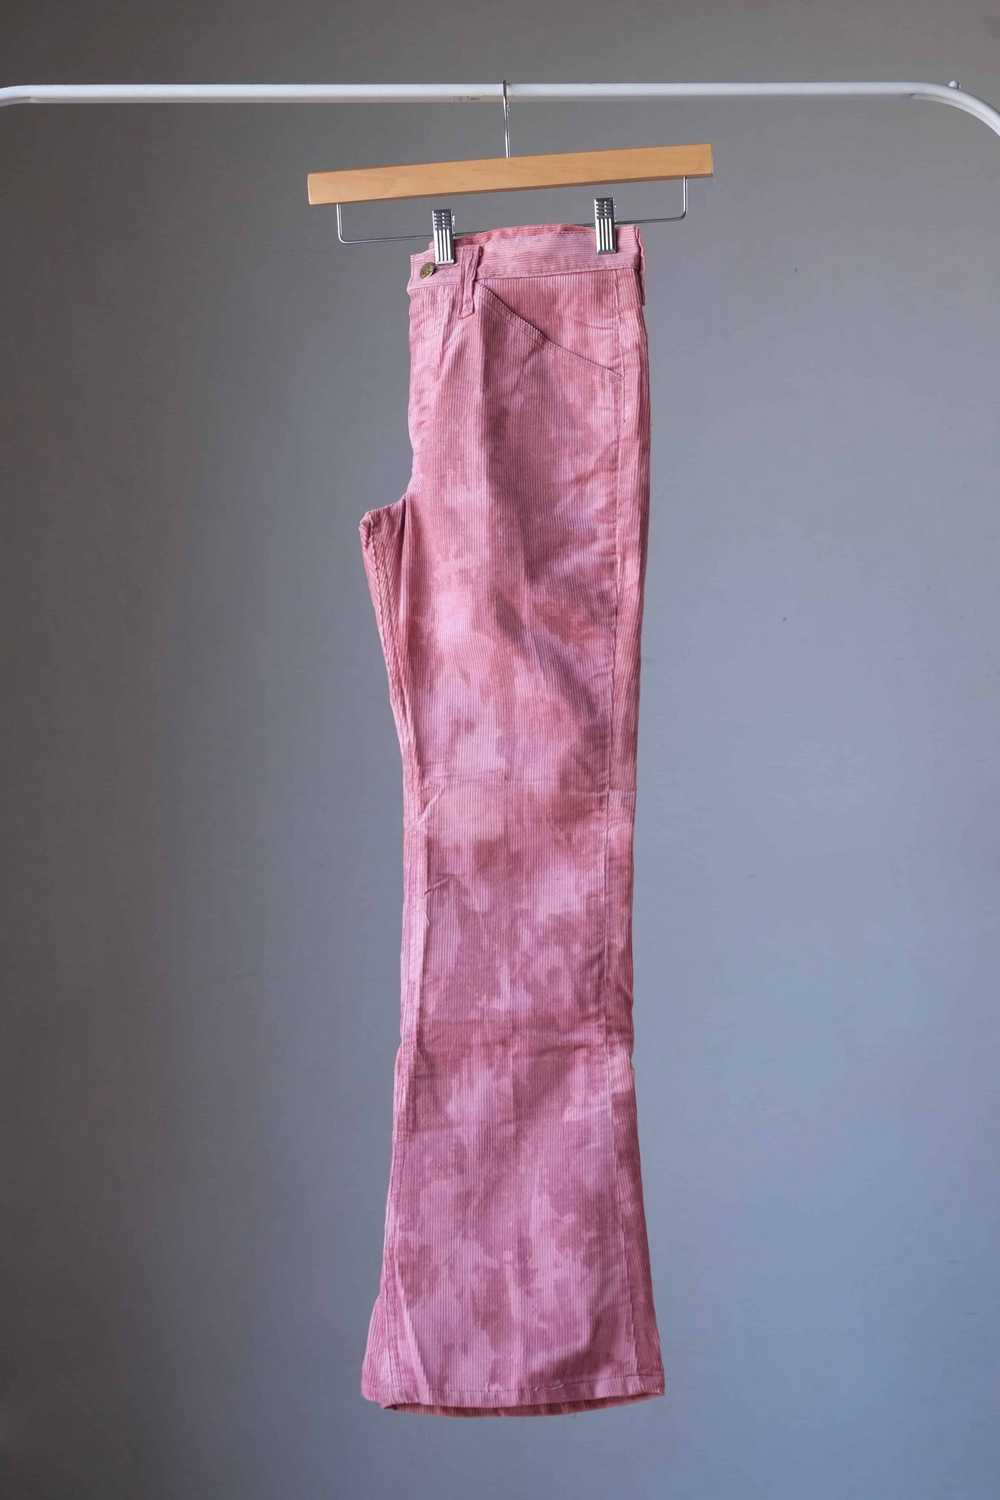 LEE Corduroy Tie-Dye 70's Bell Bottoms - Pink - image 3